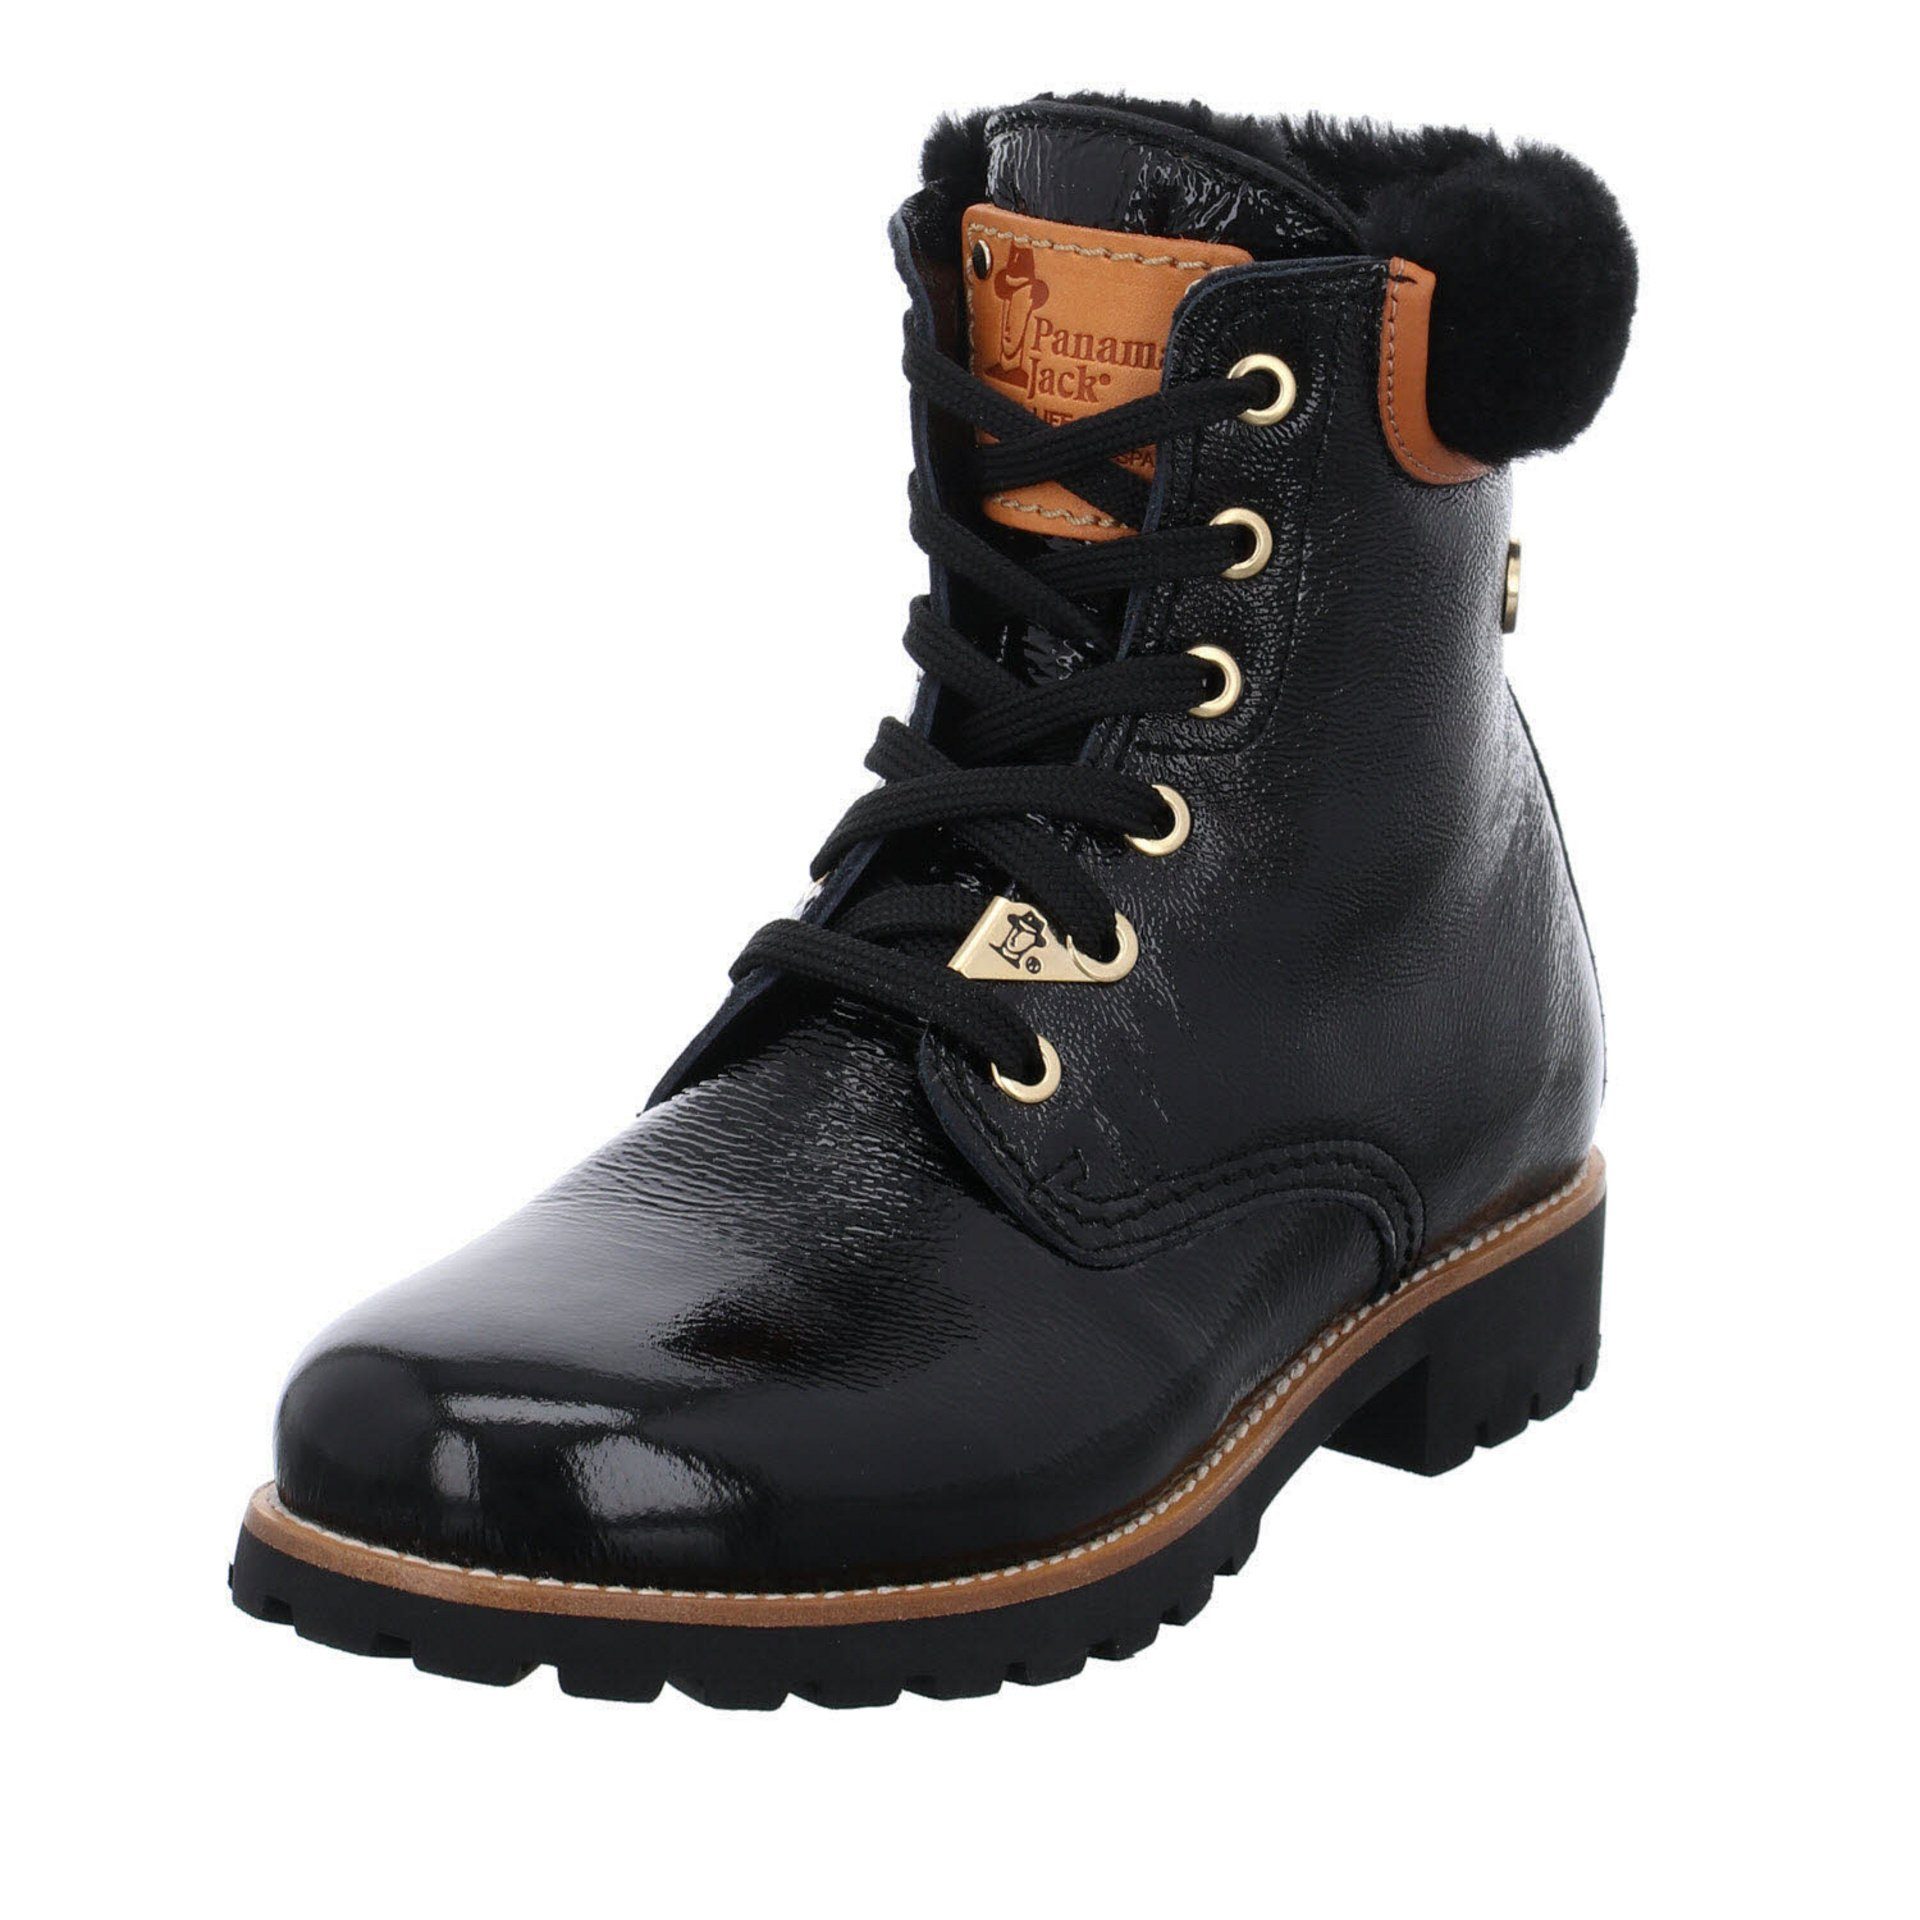 Panama Jack Damen Stiefel Schuhe Igloo Trav B14 Boots Stiefel Lackleder negro/black (16002106)